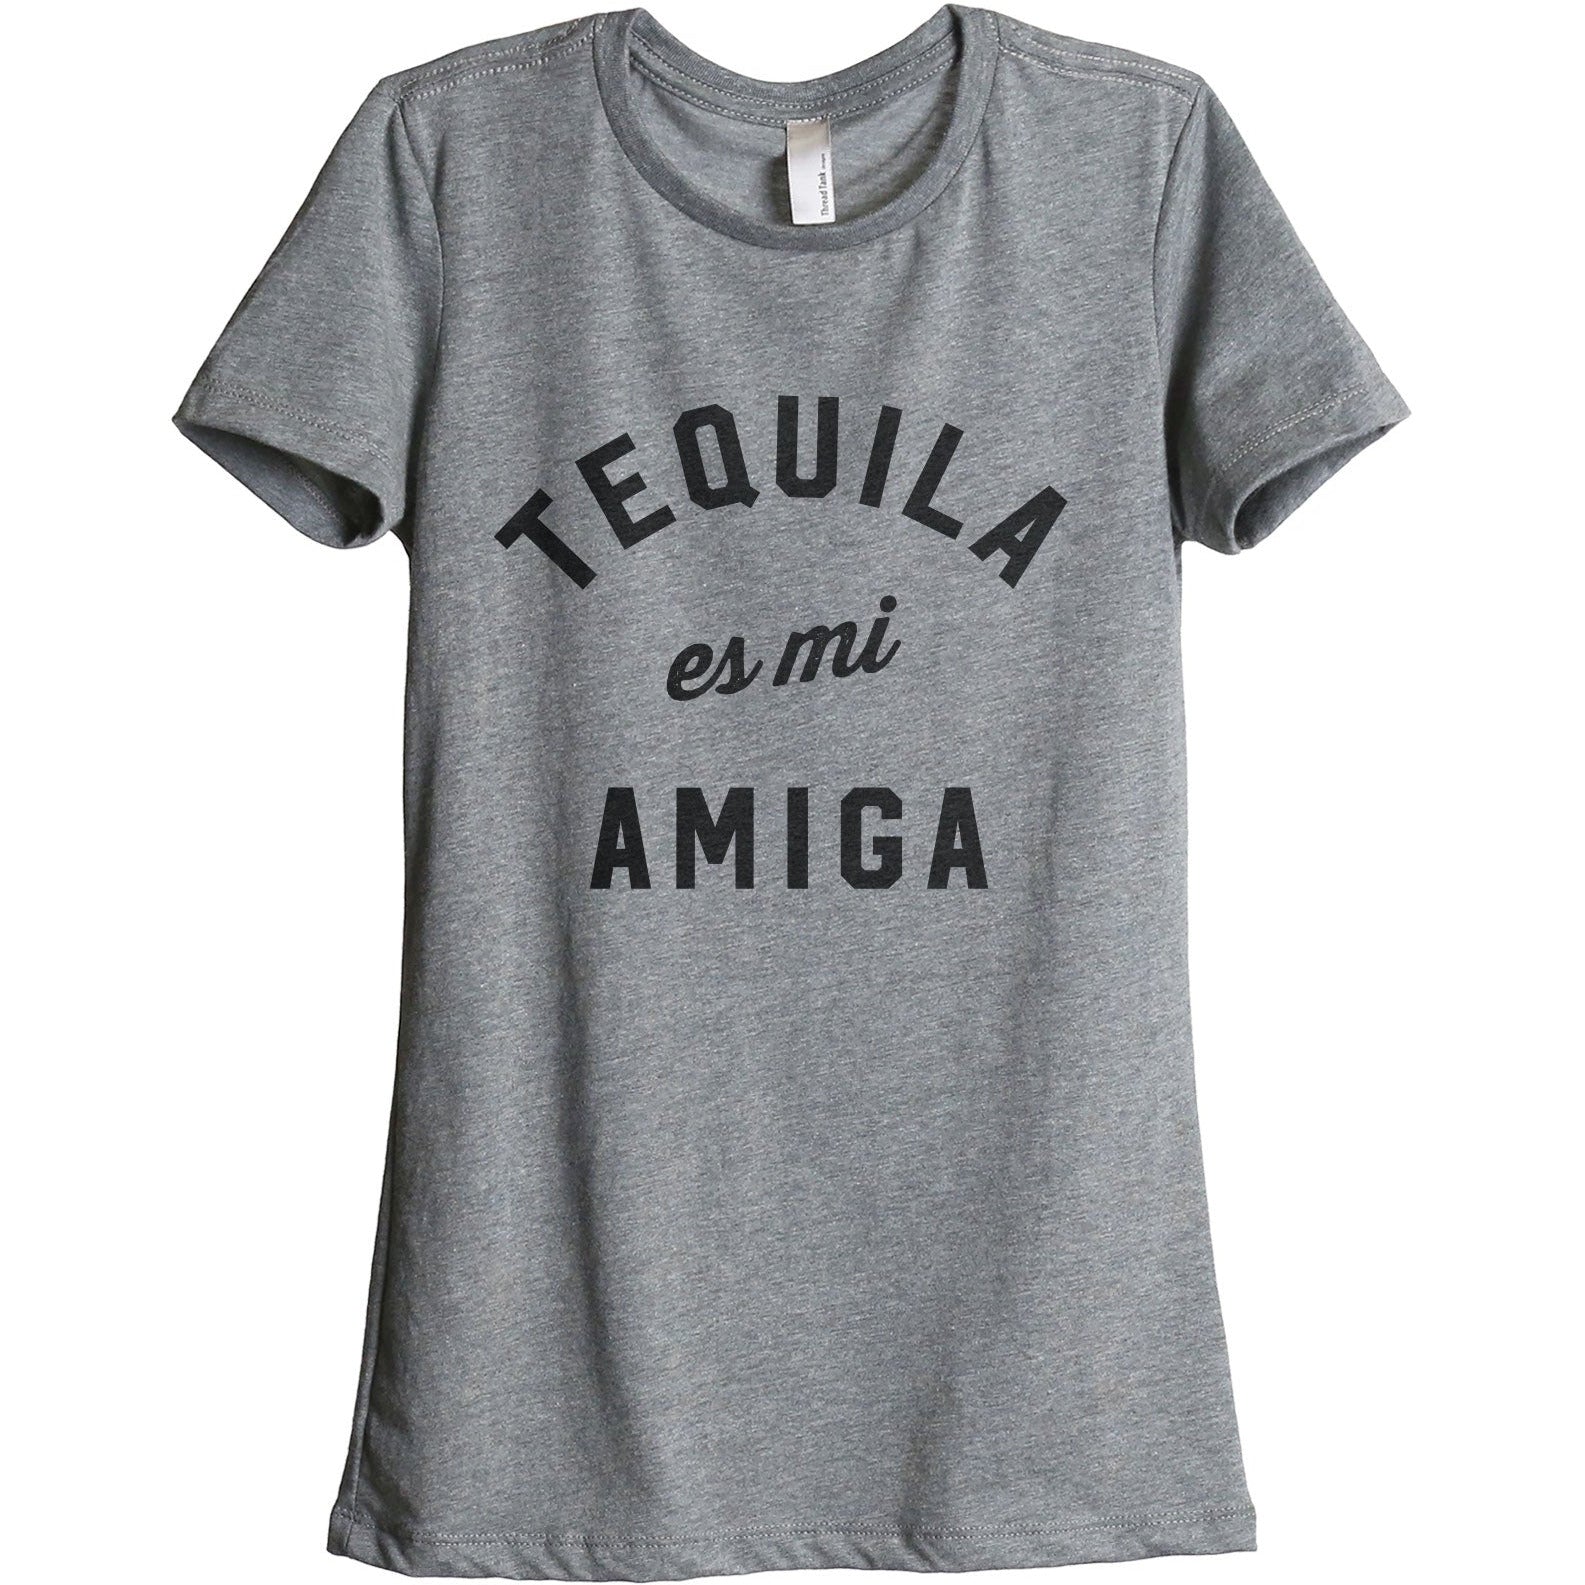 Tequila Es Mi Amiga - Stories You Can Wear